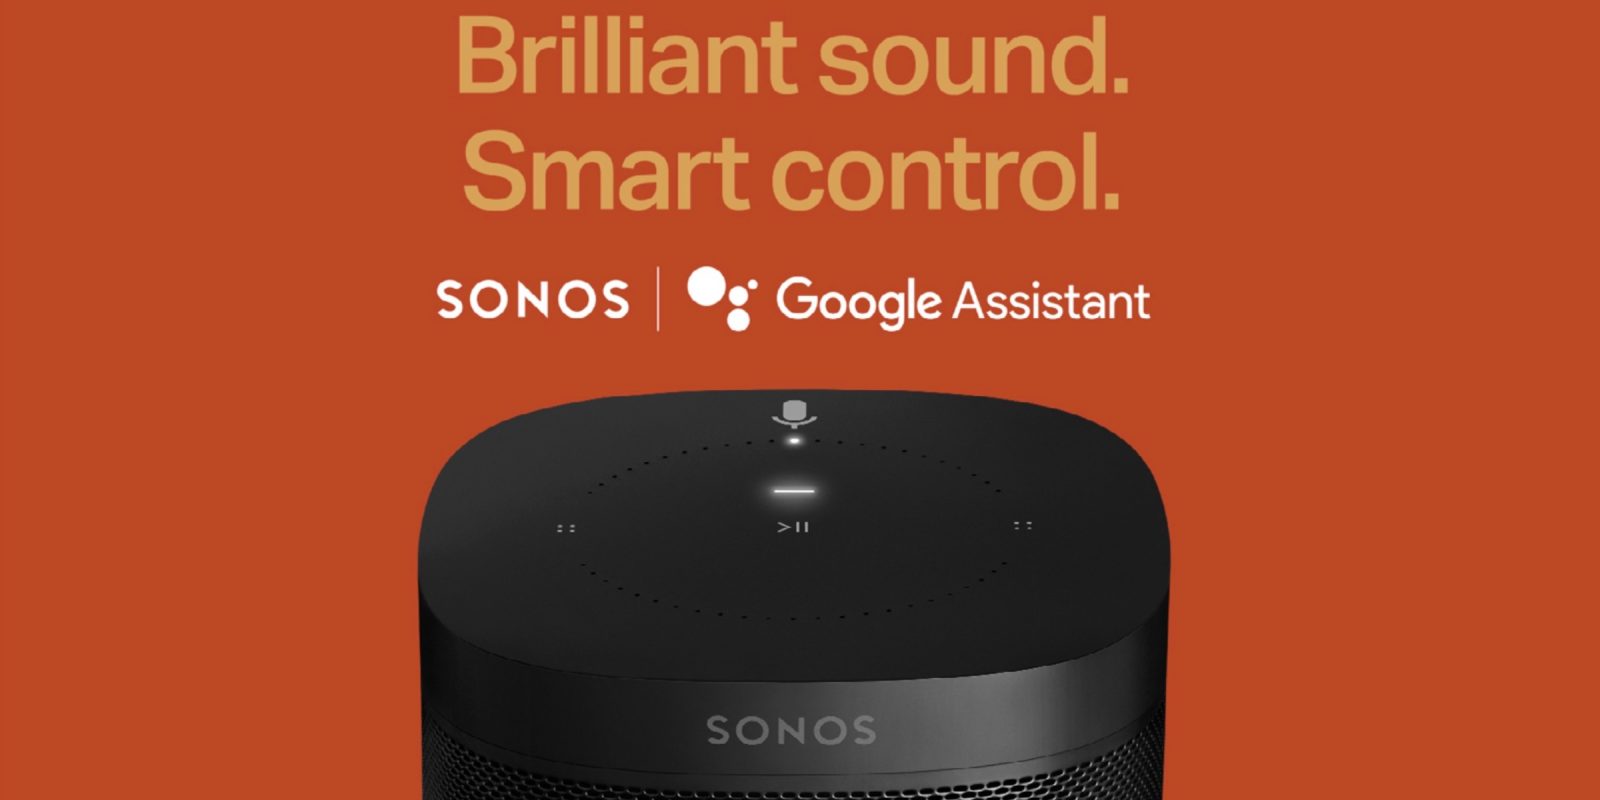 Google Assistant Sonos next week